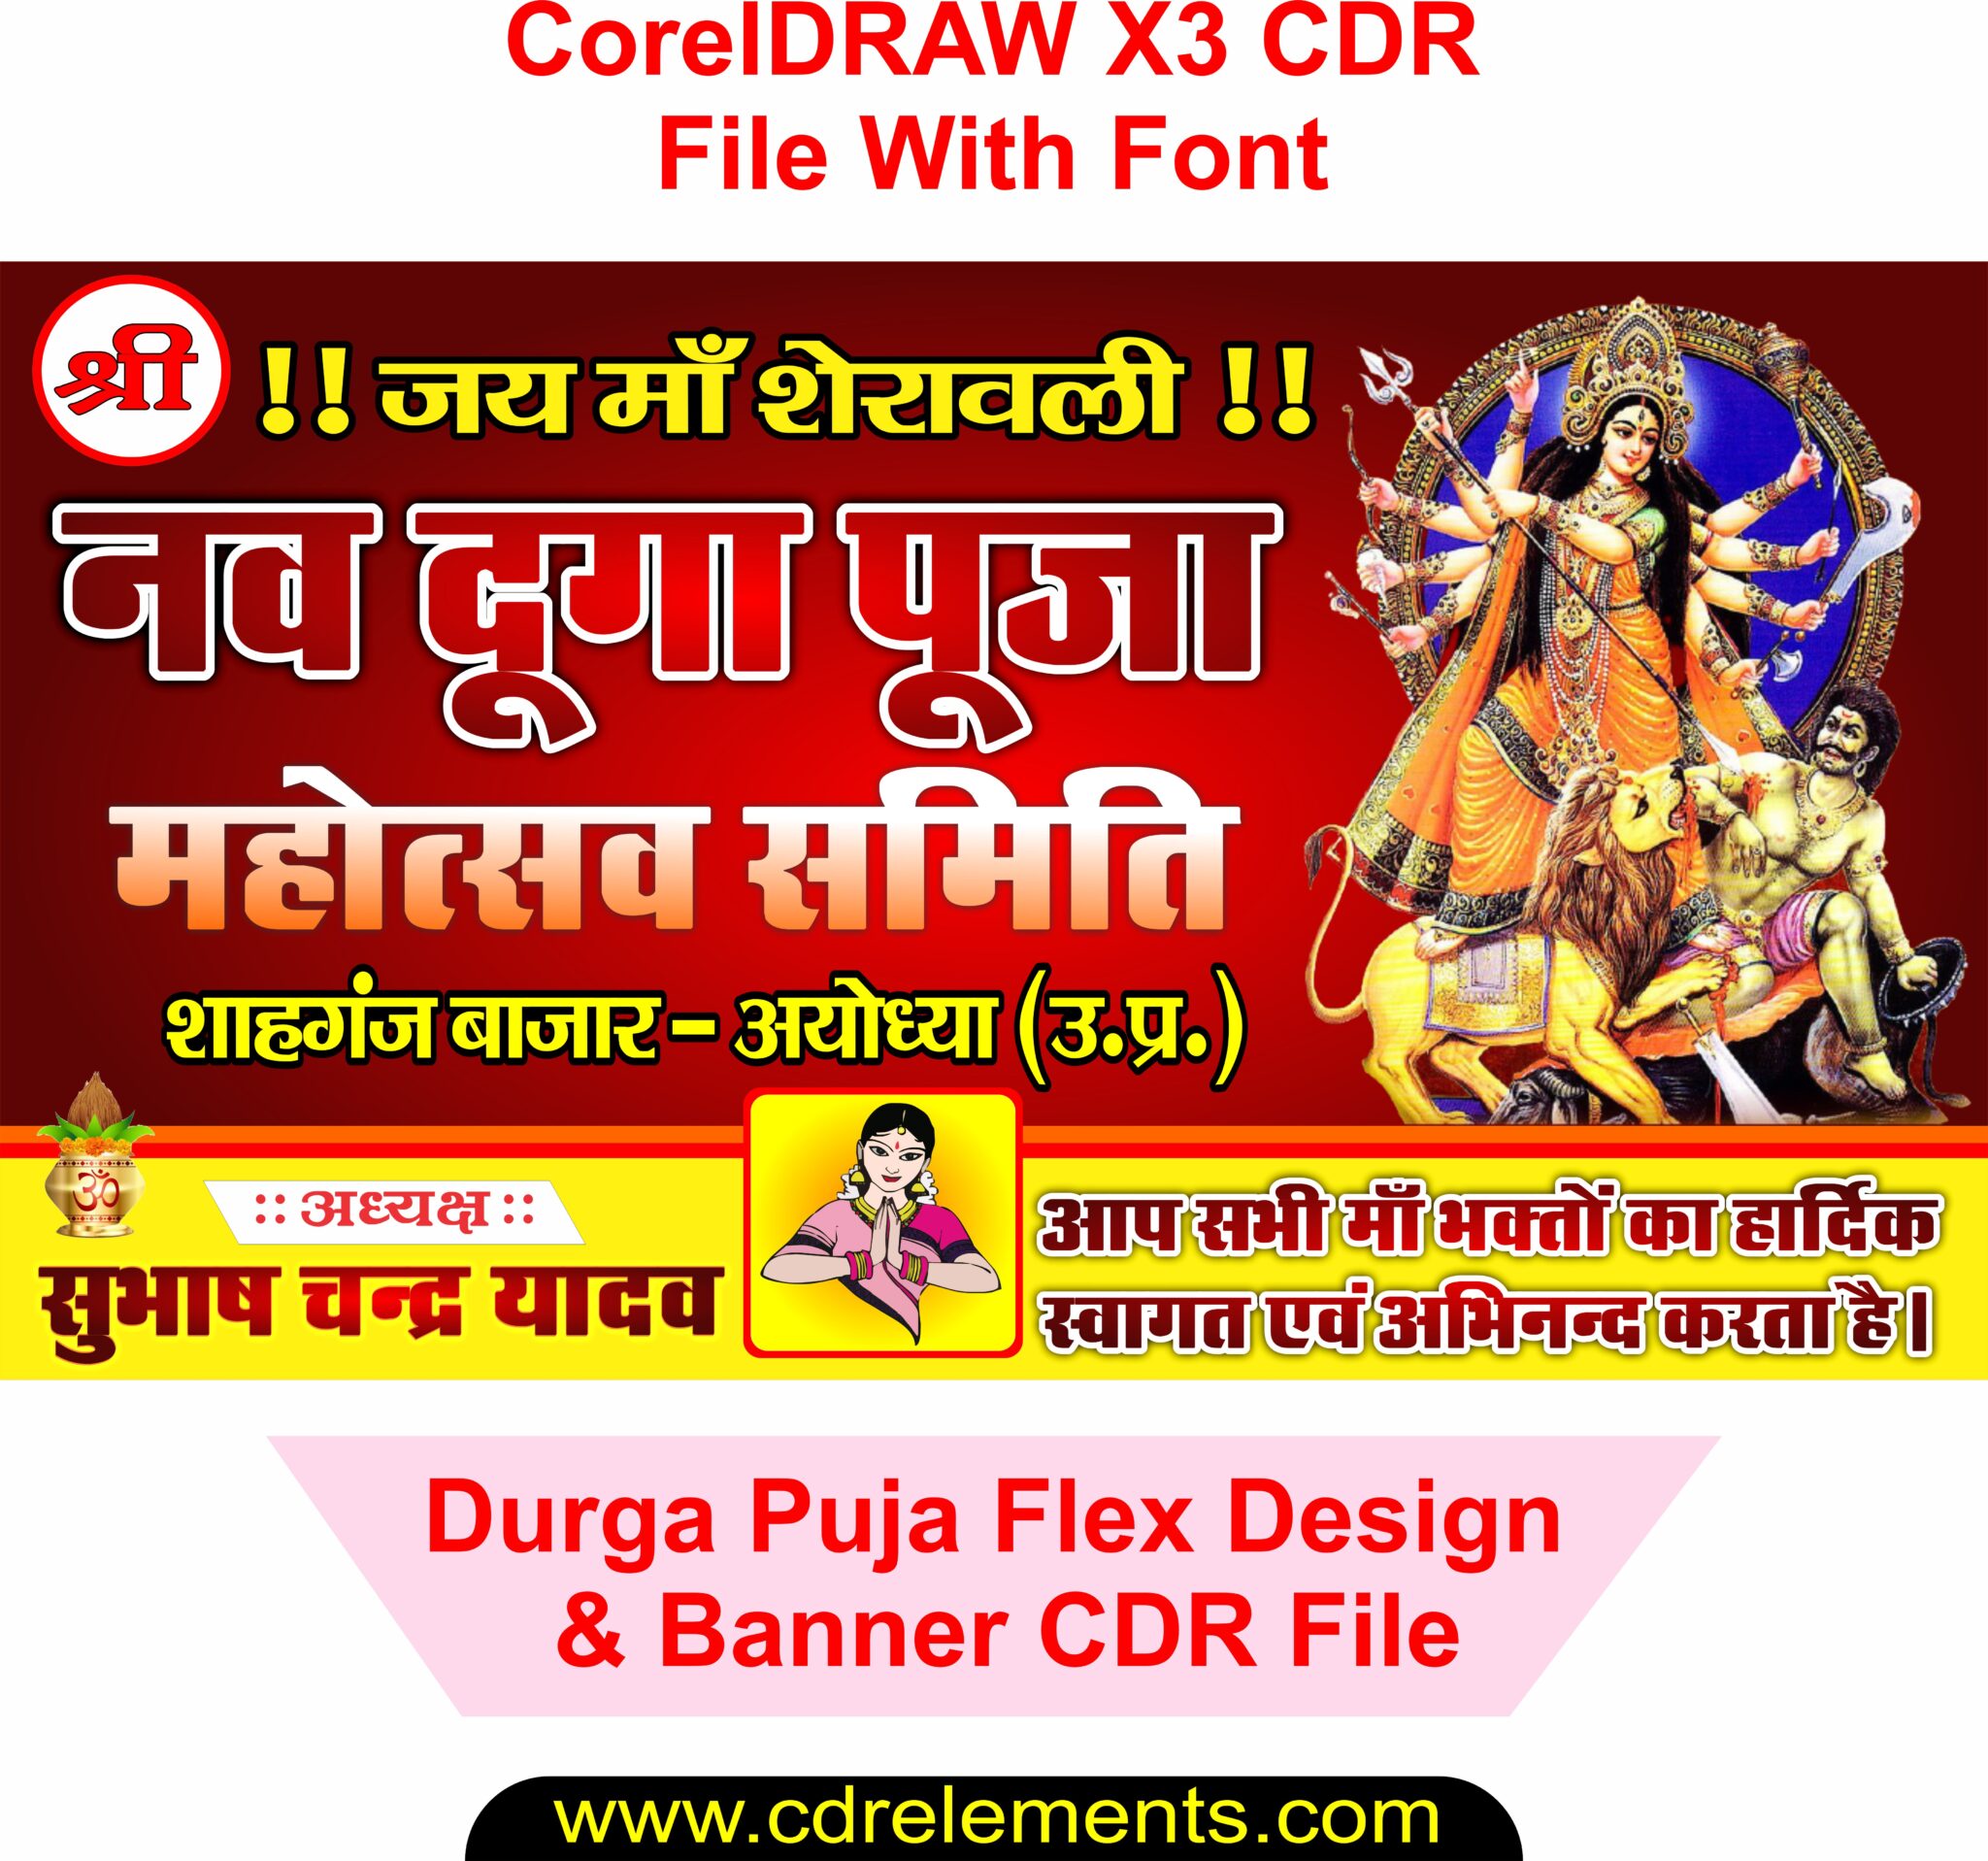 Durga Puja Flex Design & Banner CDR File - Cdrelements.com